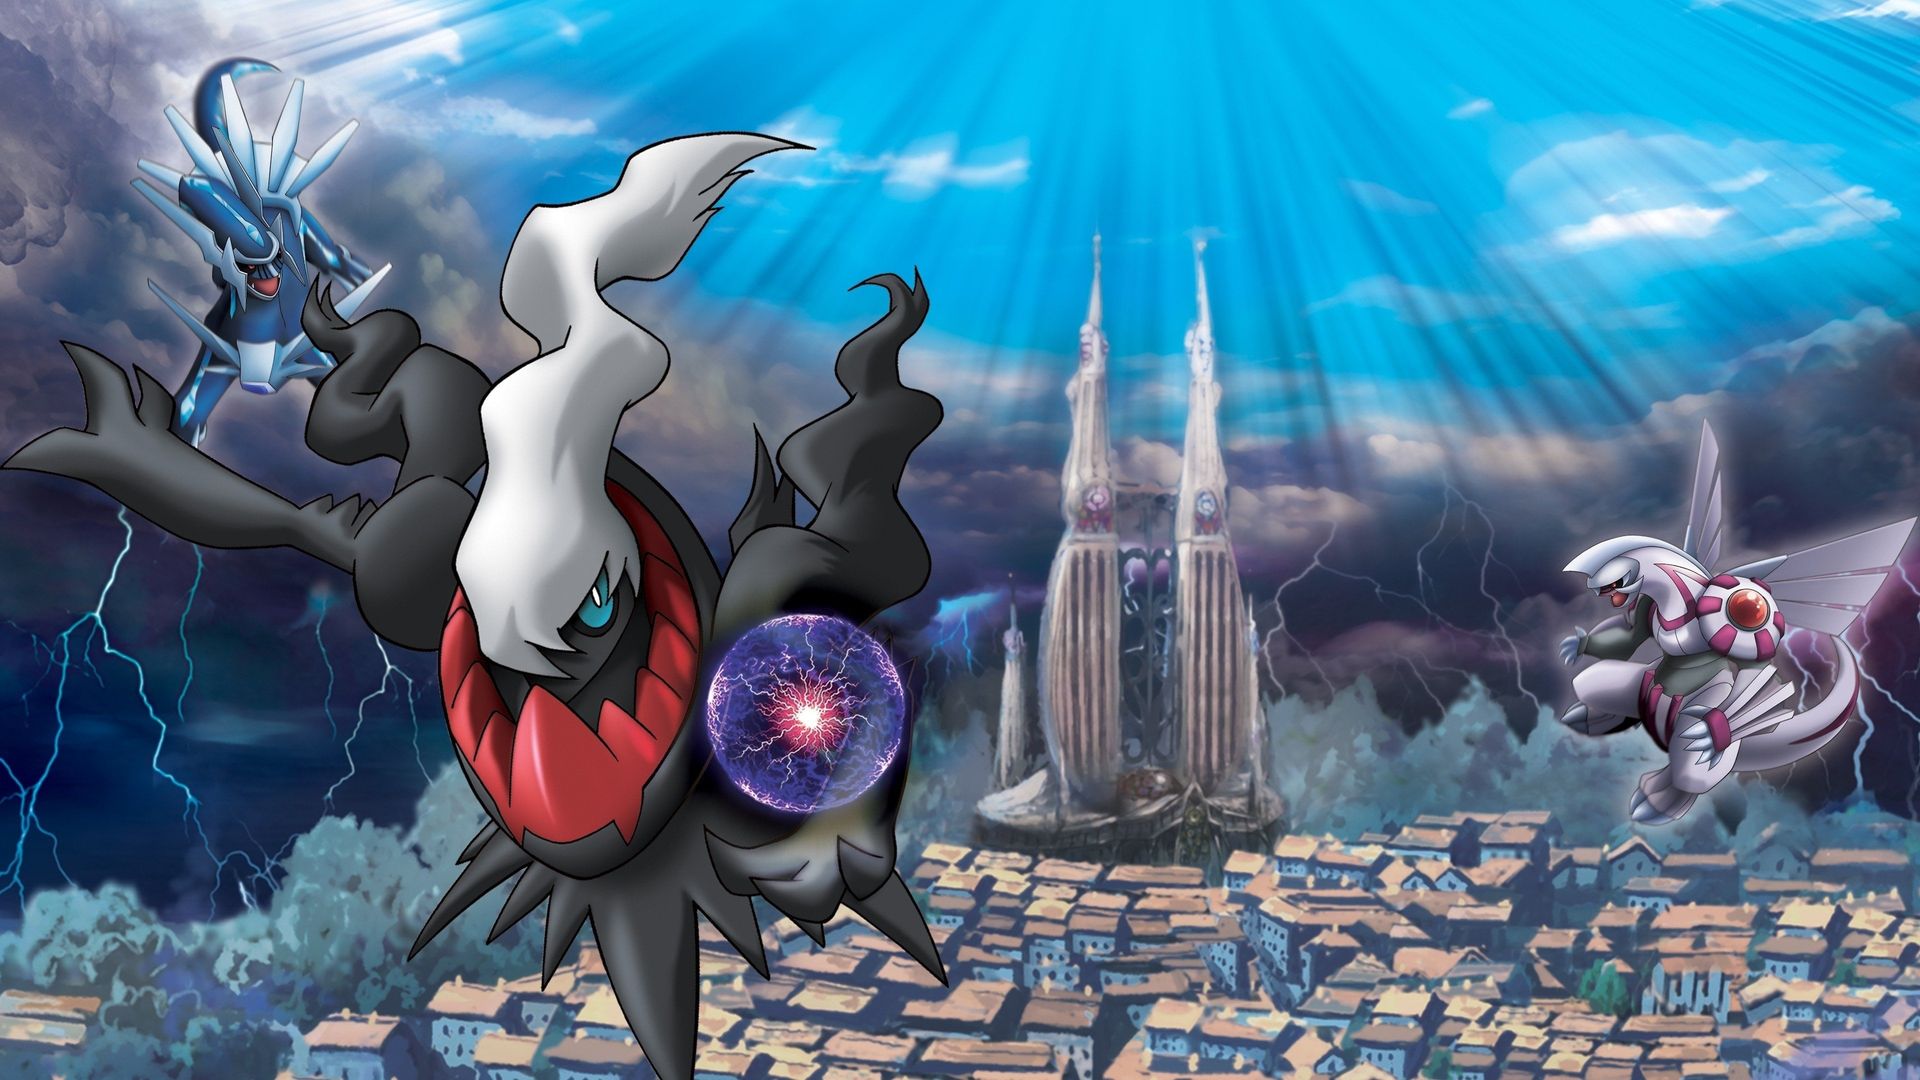 Pokémon: The Rise of Darkrai background